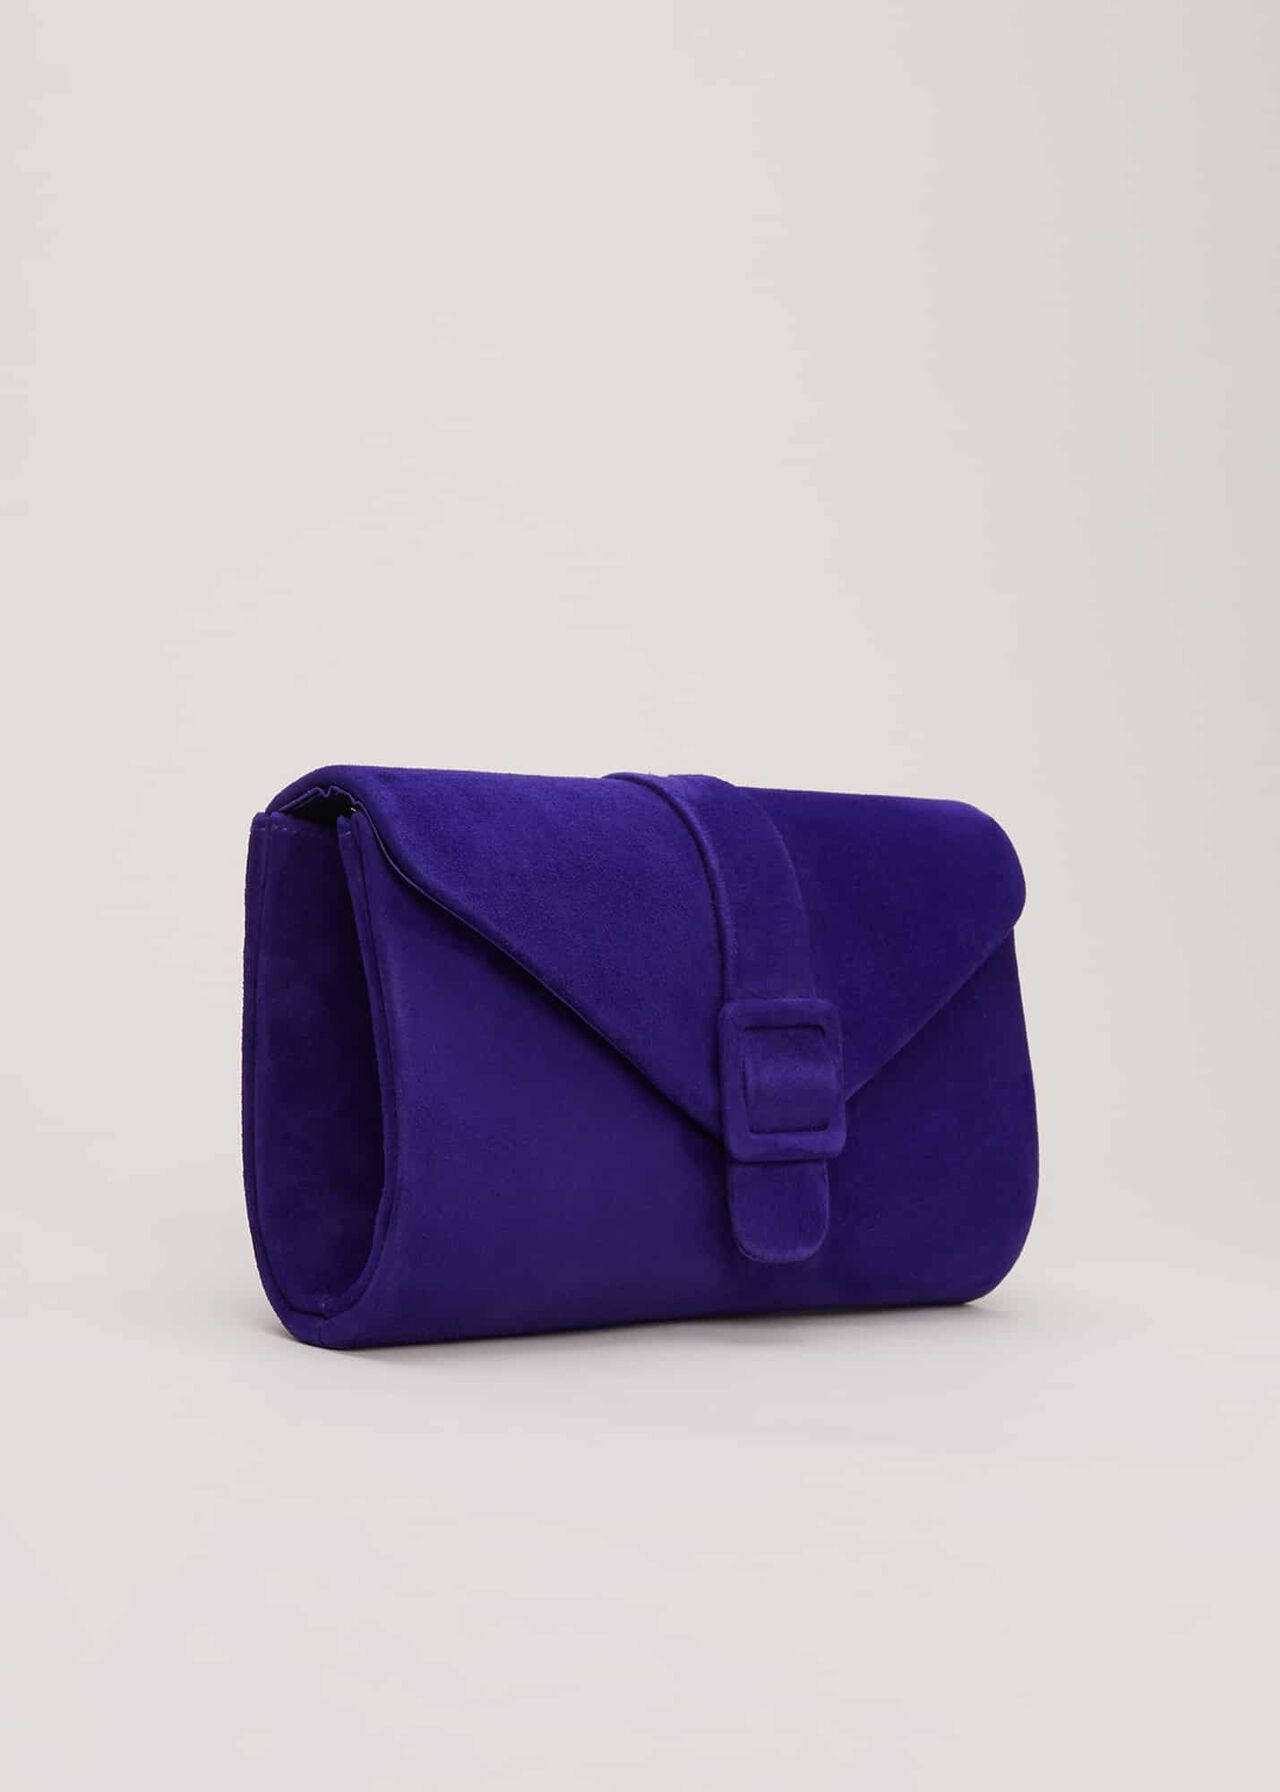 Blue Suede Clutch Bag